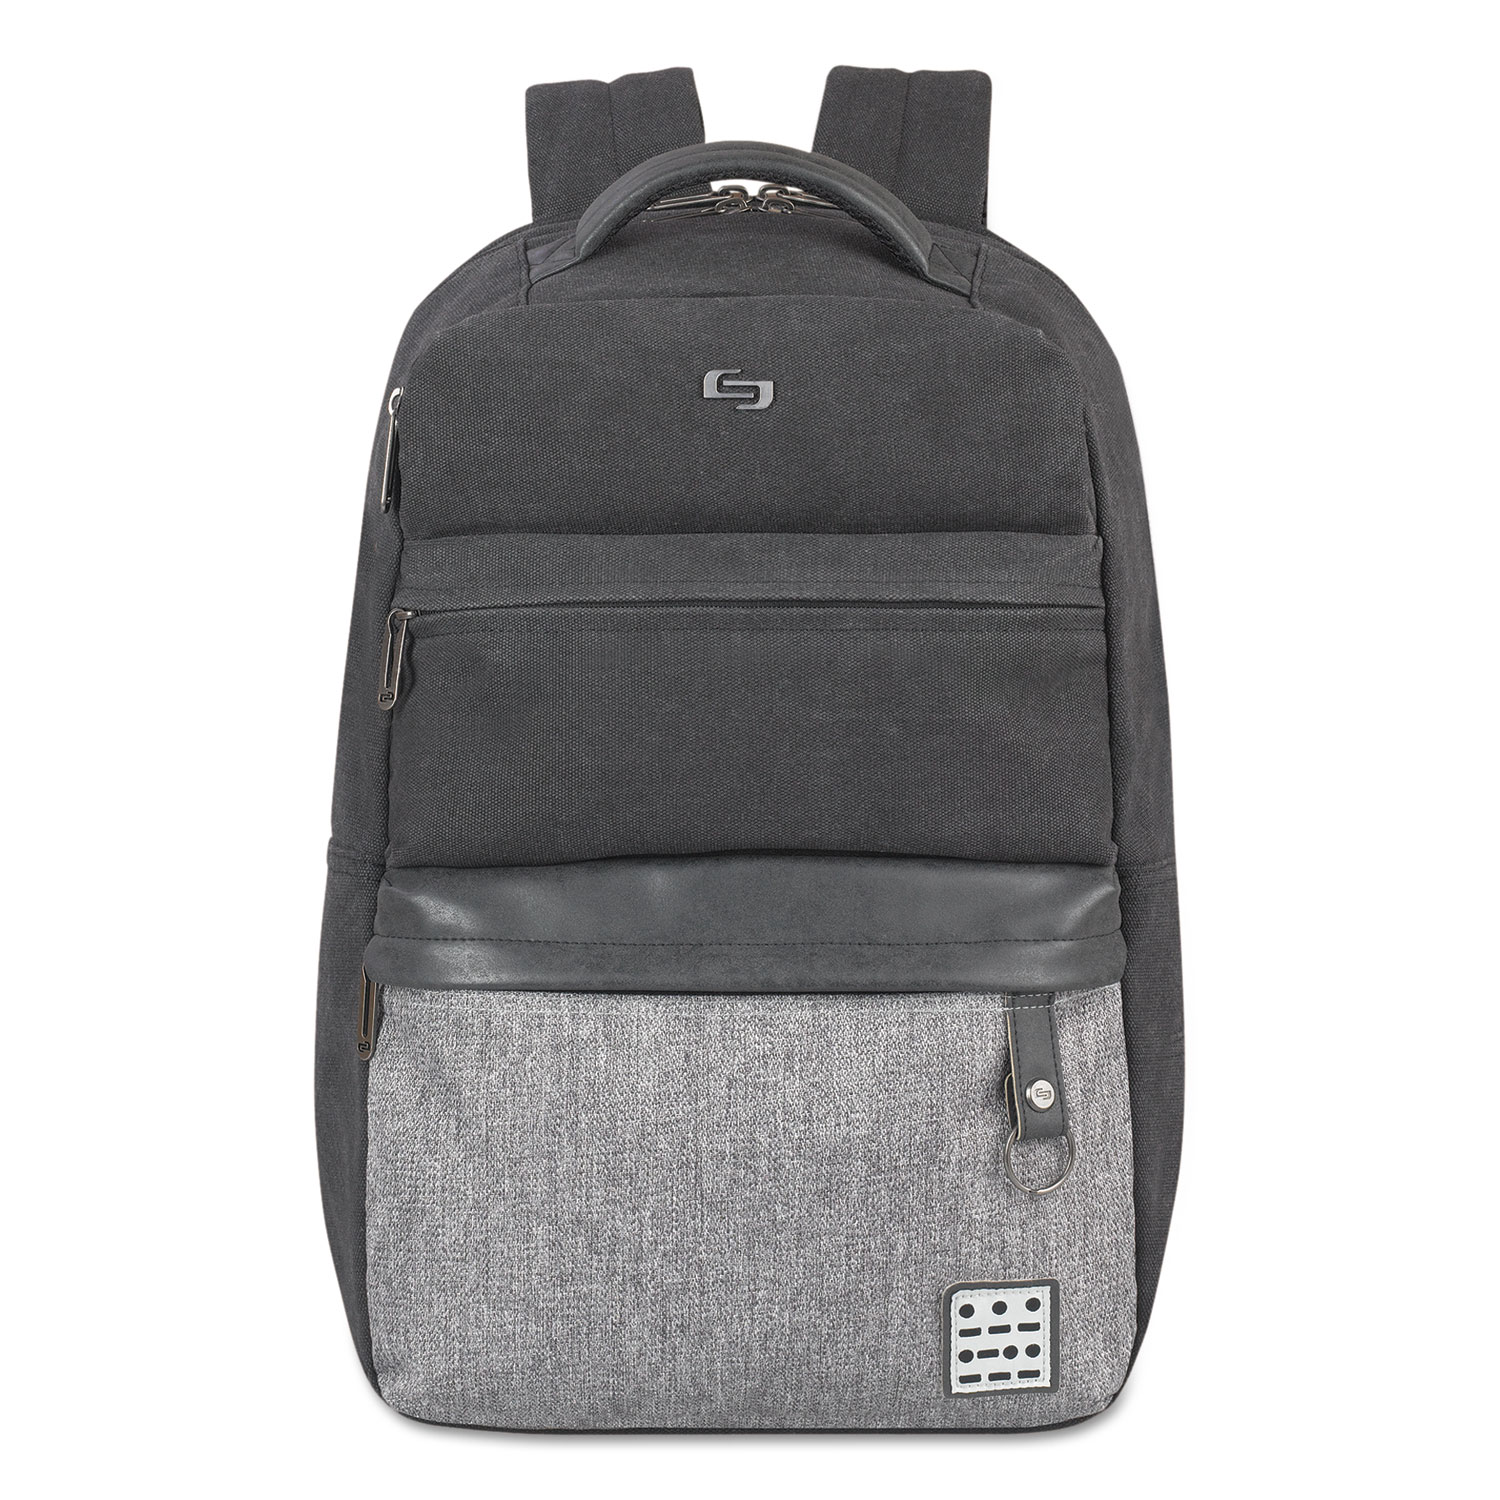 Urban Code Backpack, 15.6, 12 1/4 x 5 x 18, Black/Gray